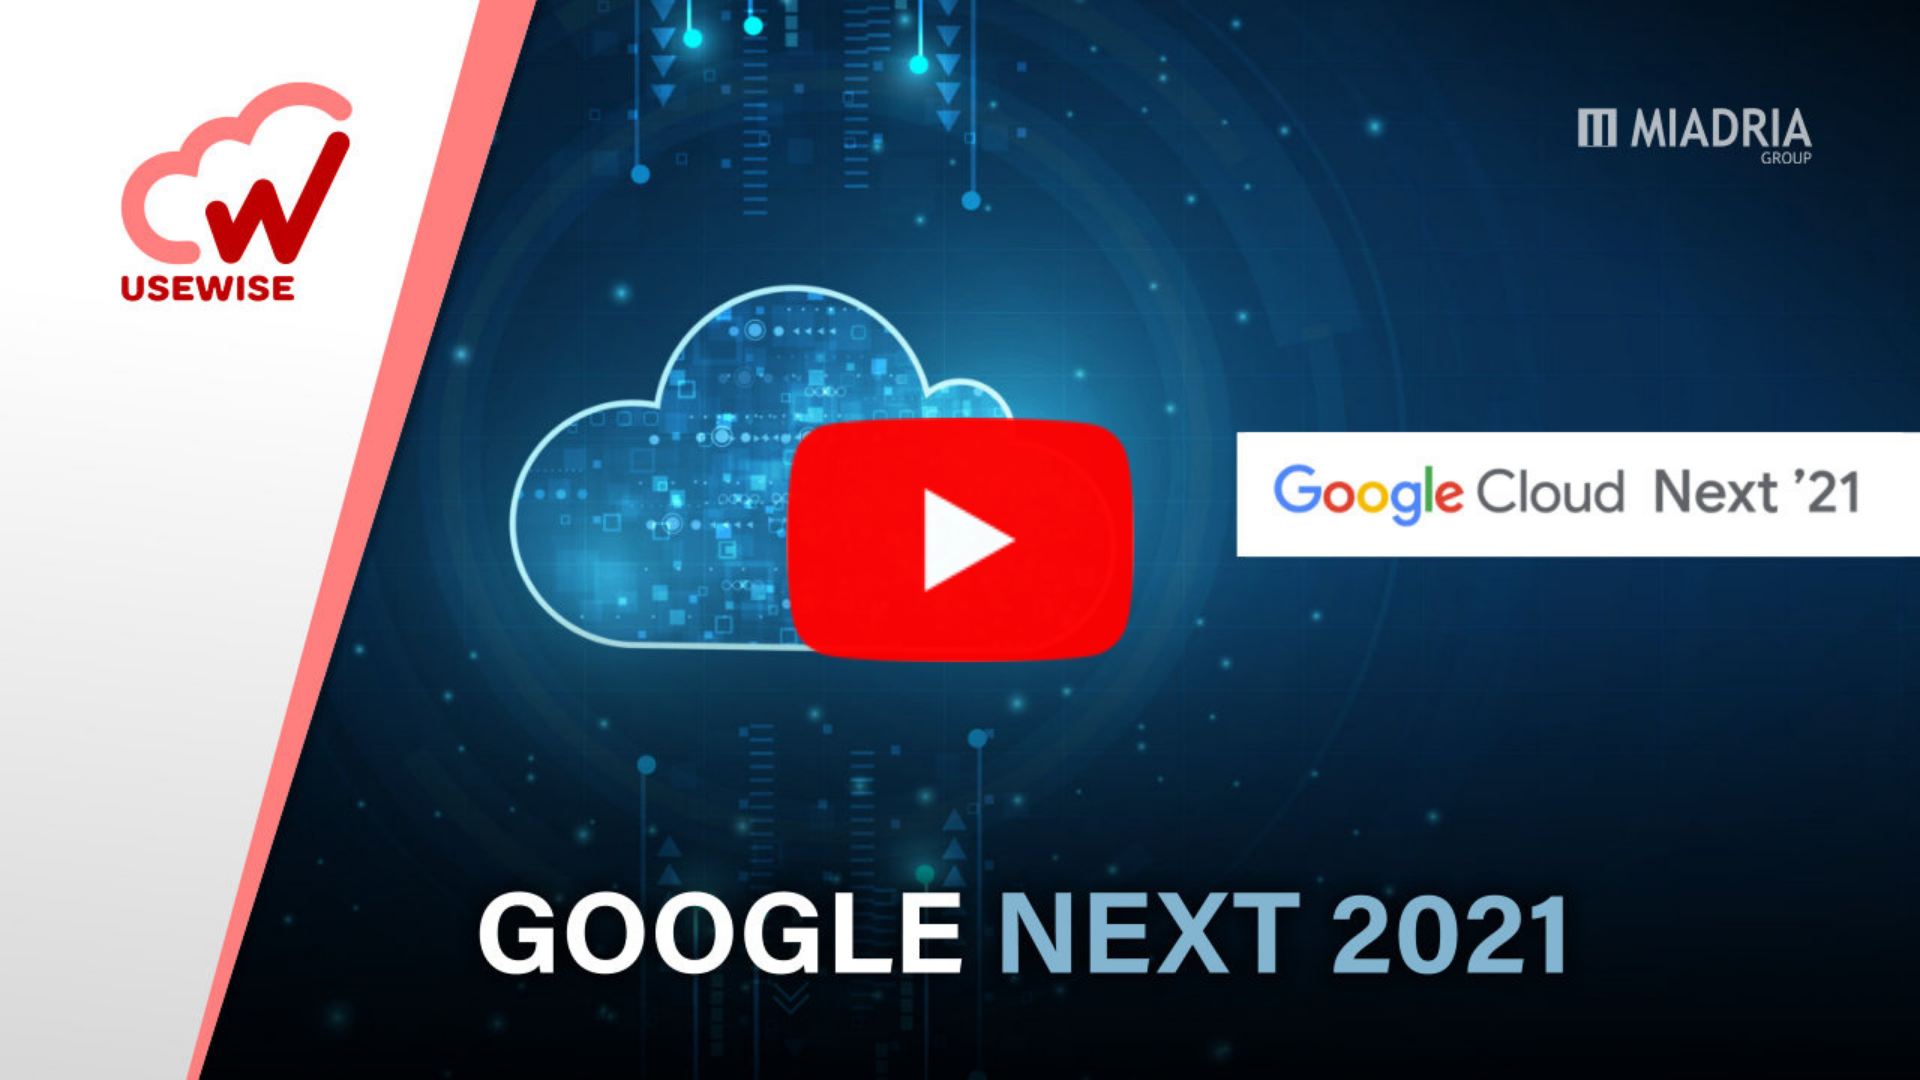 Google Cloud Next 2021 overview